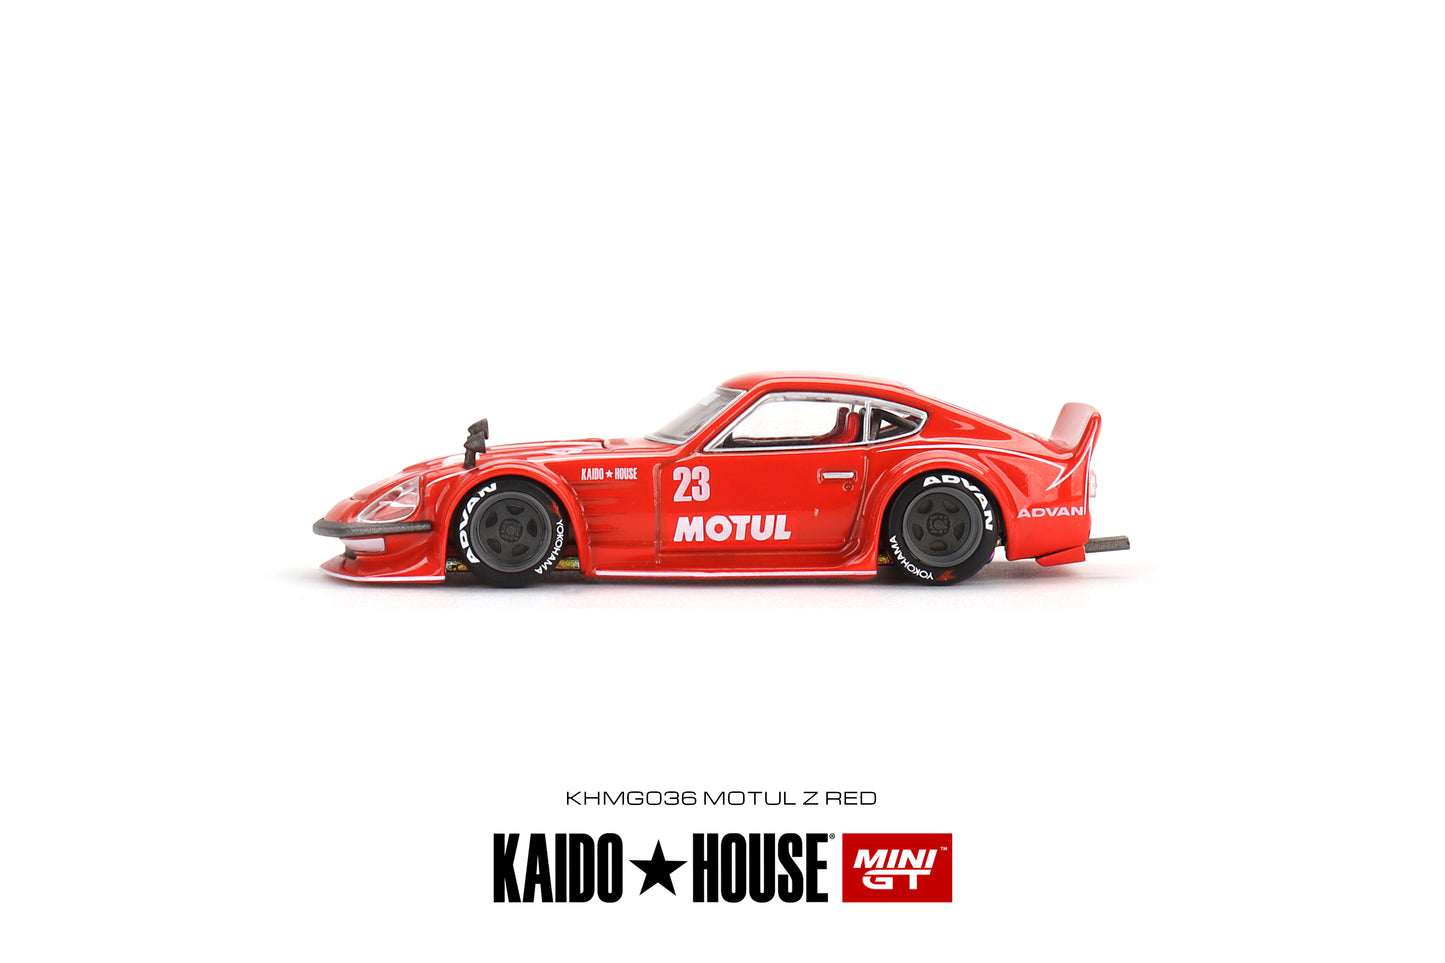 Mini GT Kaido House 036 Datsun Fairlady Z Red 1:64